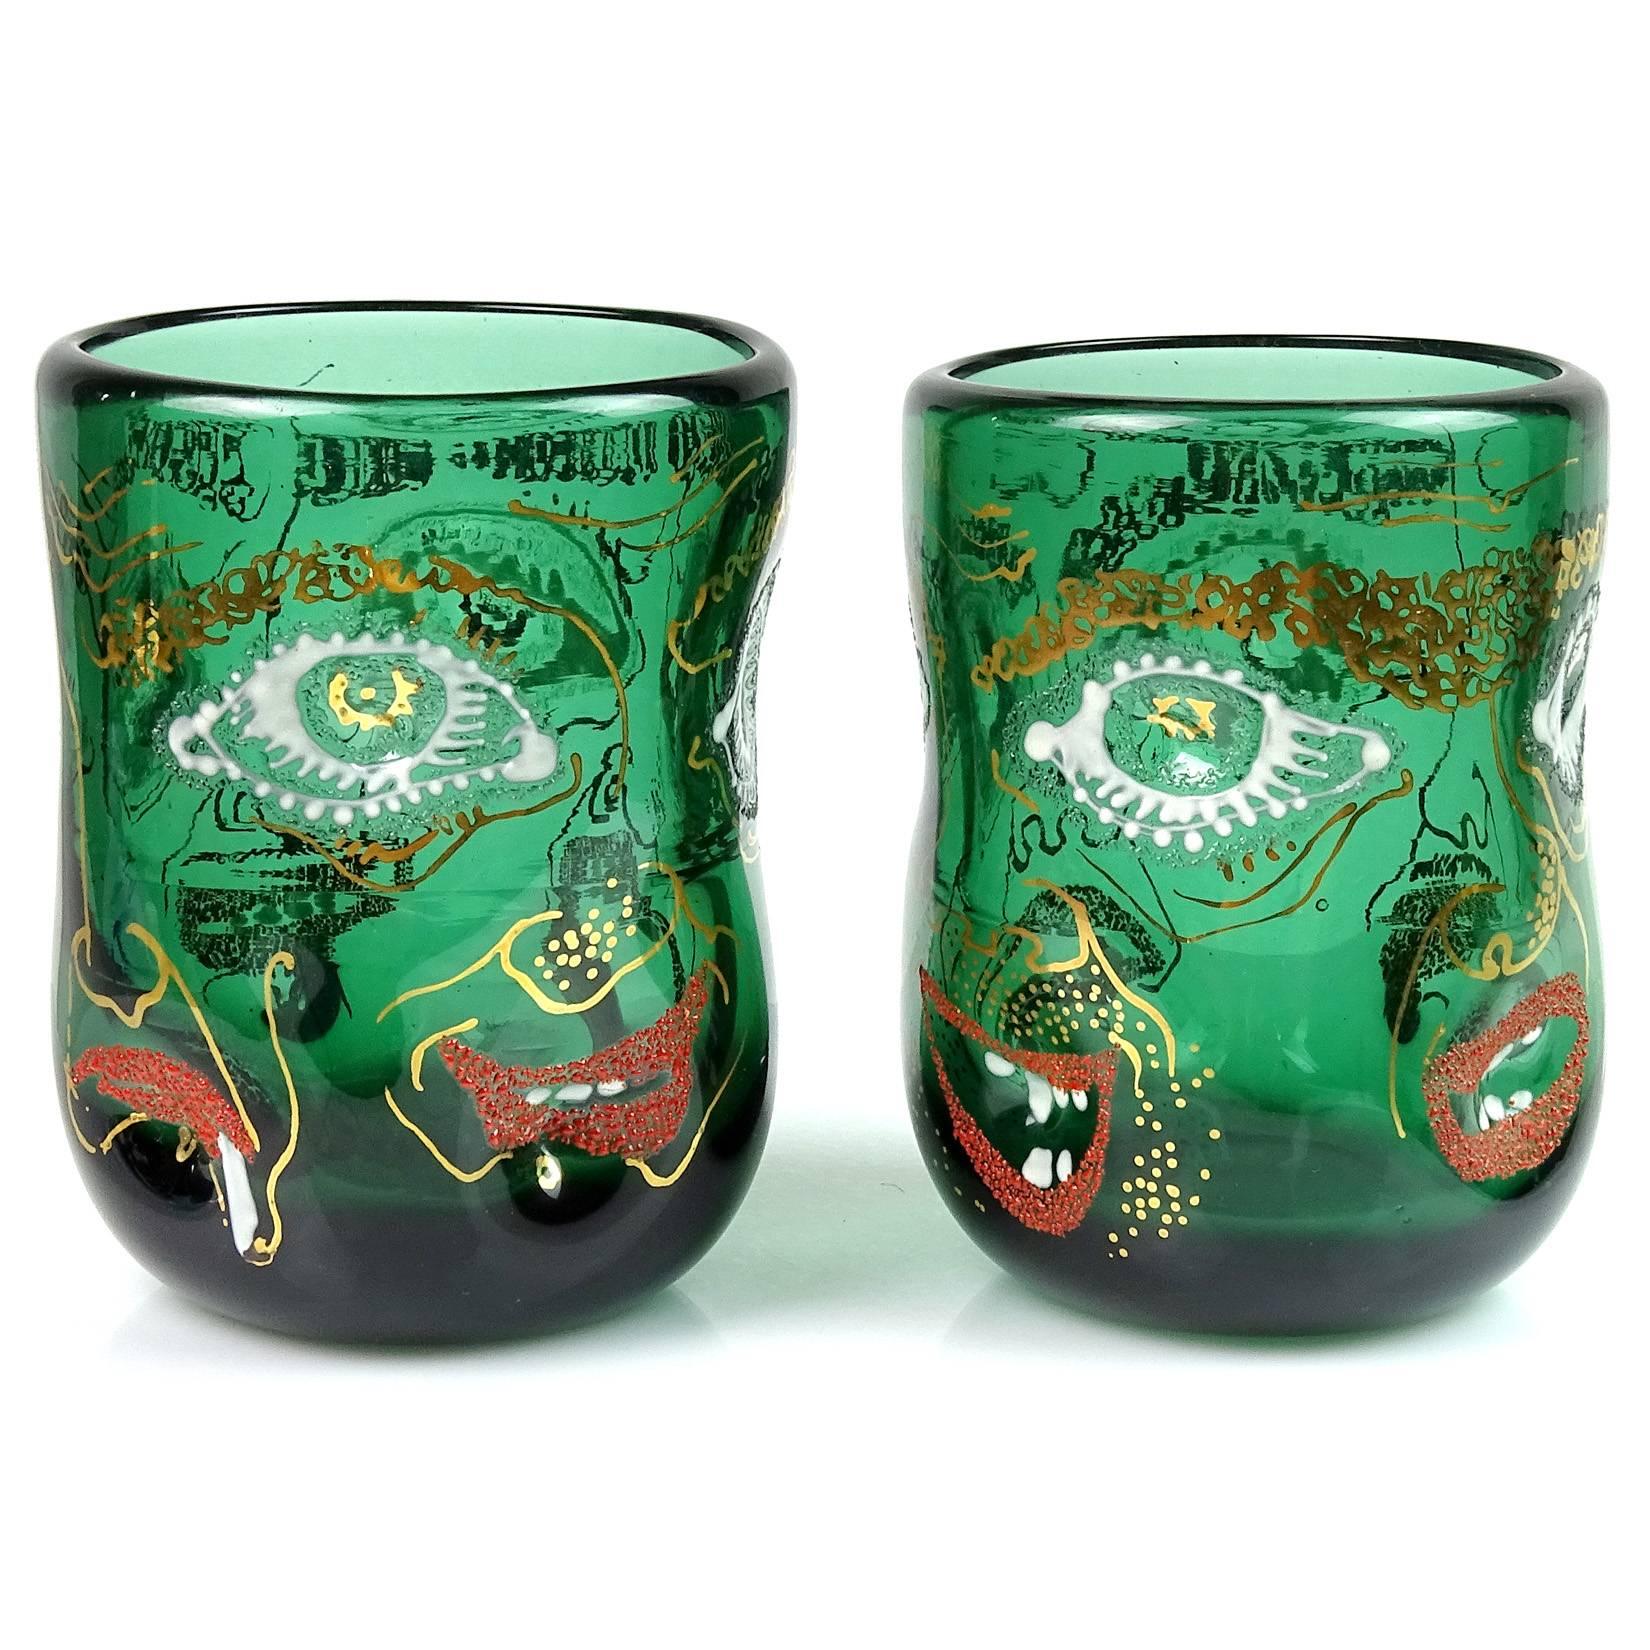 Free shipping worldwide! See details below description.

Very rare set of six Murano handblown dark green Italian art glass drinking glasses with enamel and gold gilt 